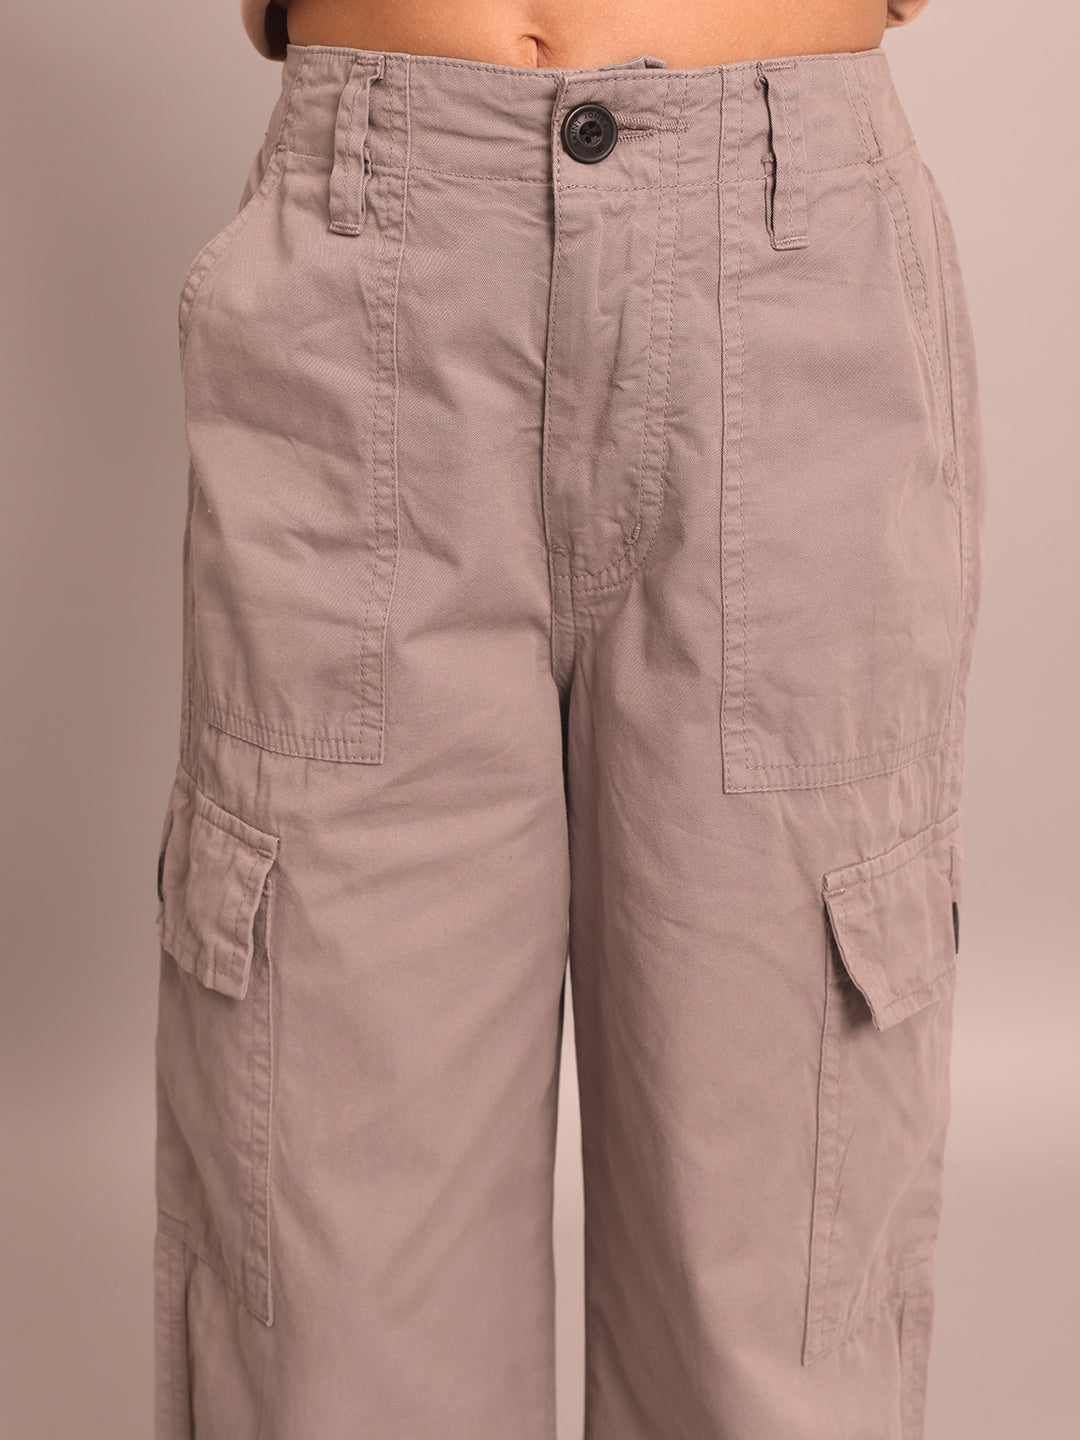 Light grey cargo pants